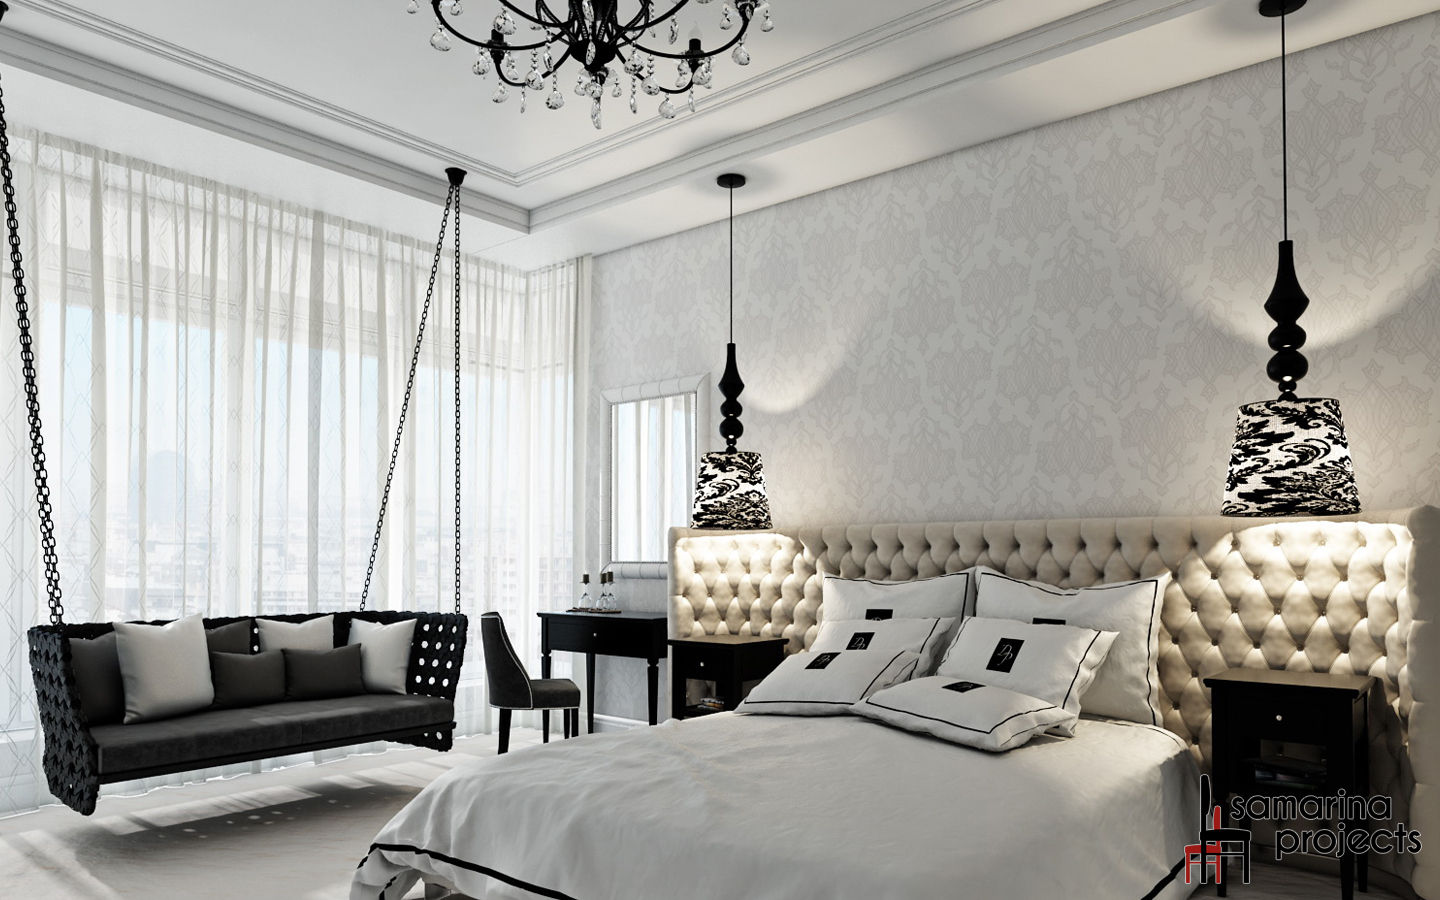 Дизайн квартиры "Невесомая красота" , Samarina projects Samarina projects Classic style bedroom